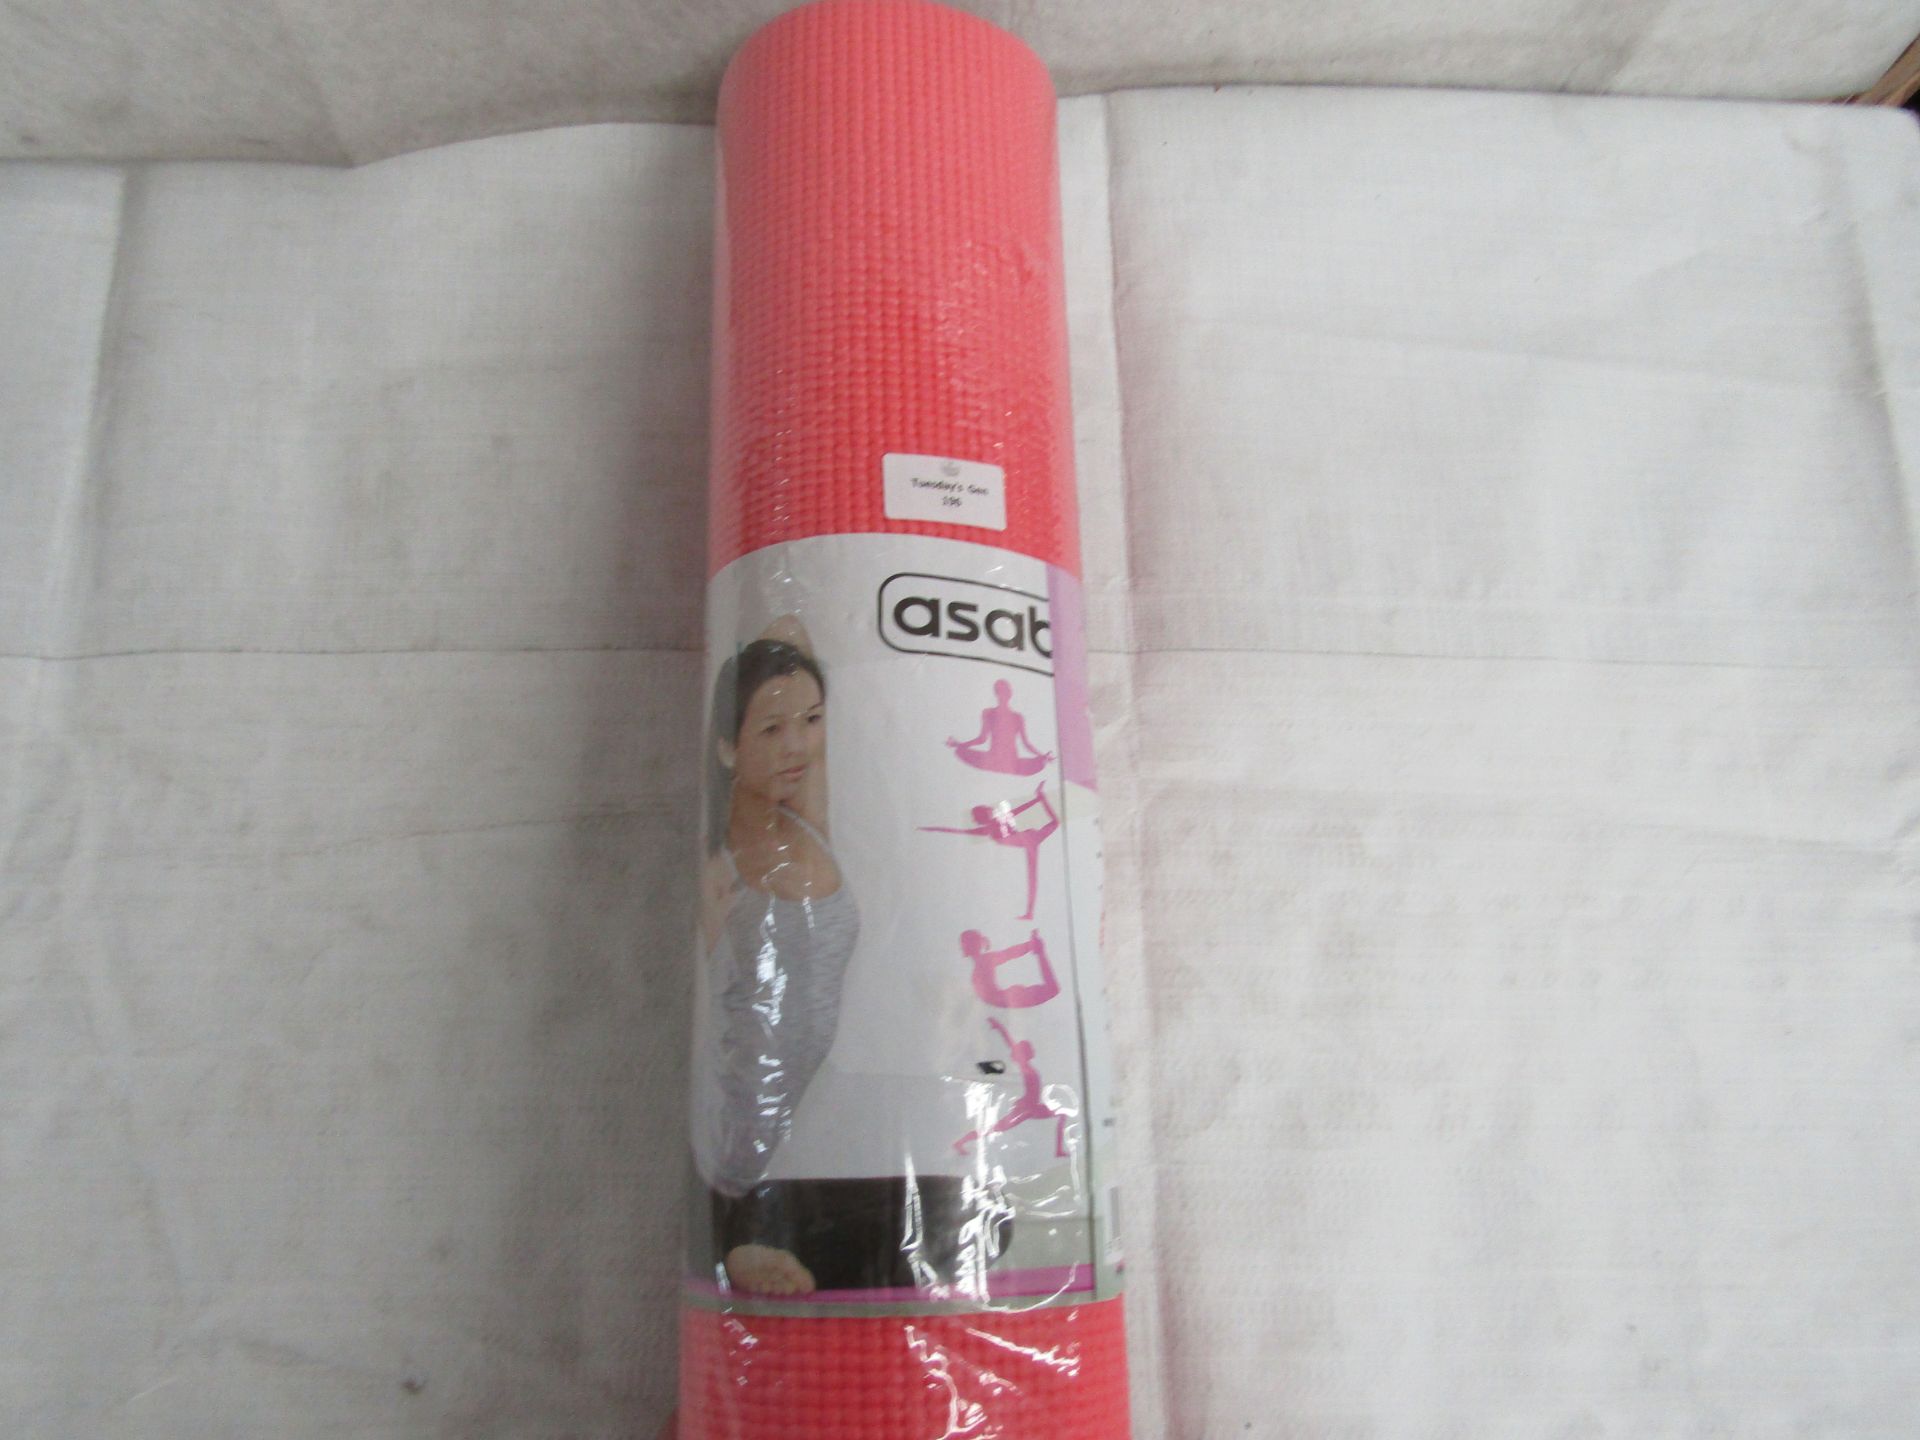 Asab - Pink Foam Yoga Mat - Packaged.